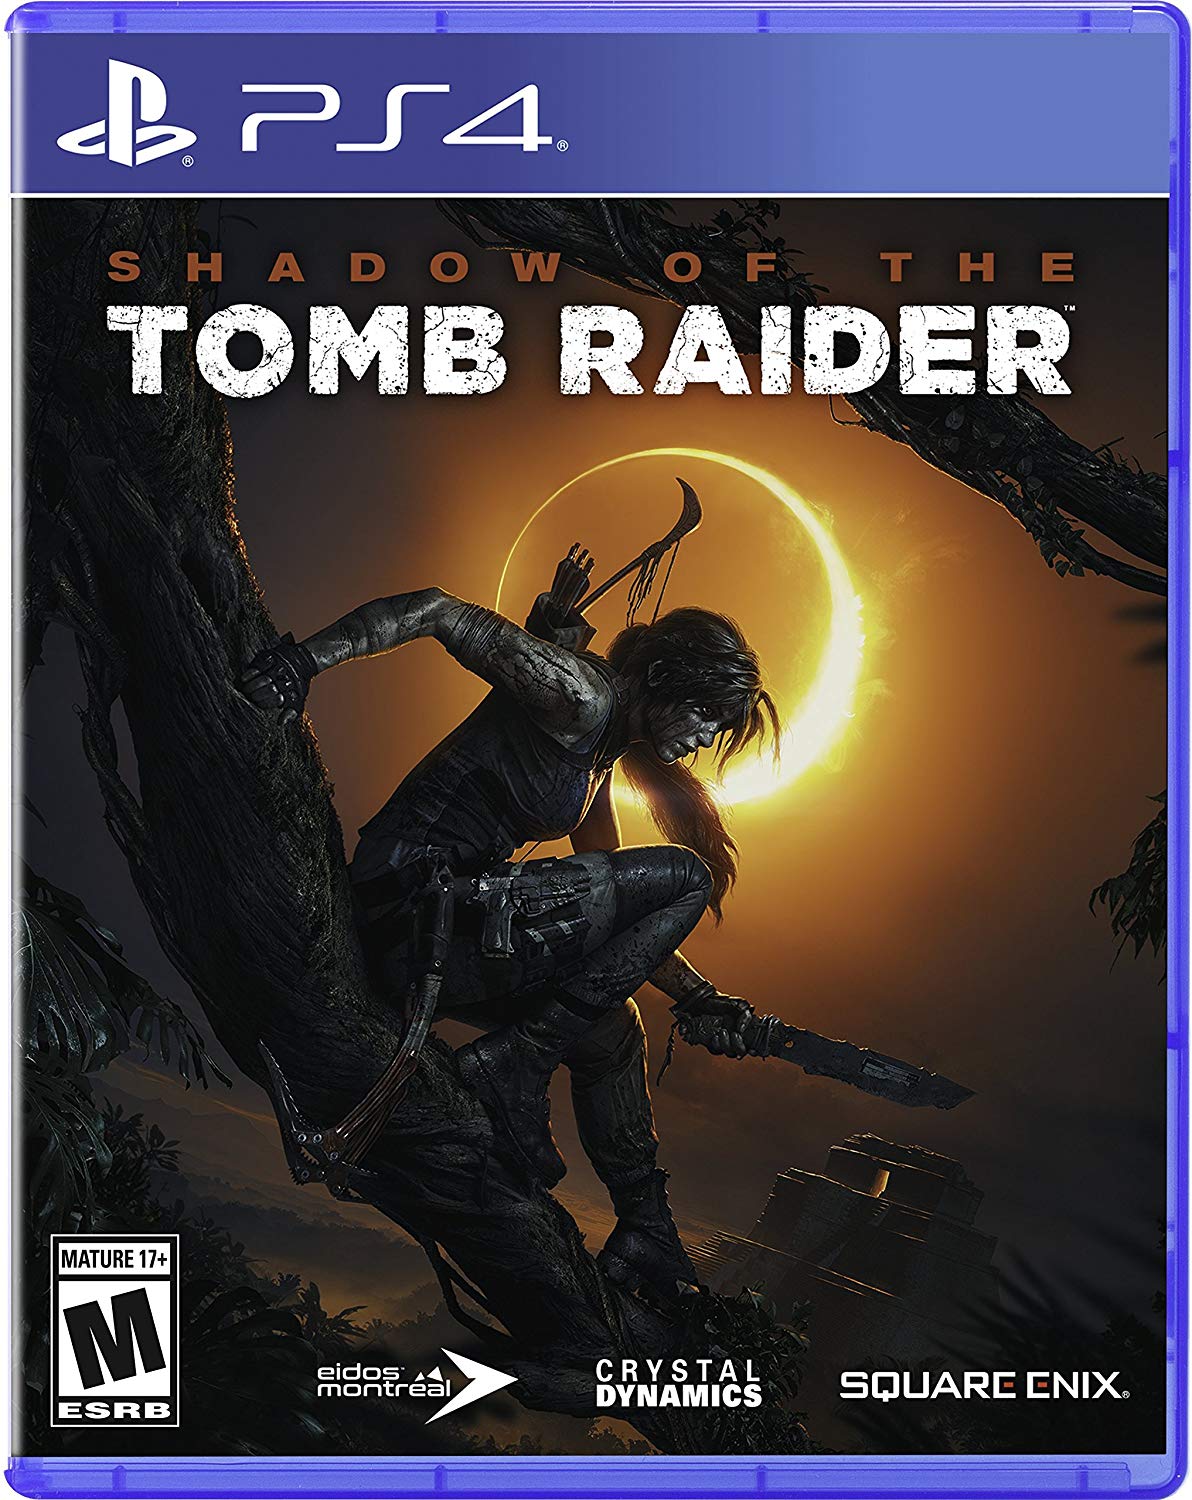 tomb raider ps4 - Bas4 S Ha Do Wo E T H E Tomb Raider Mature 17 eidos montreal Crystal Dynamics Square Enix. Esrb